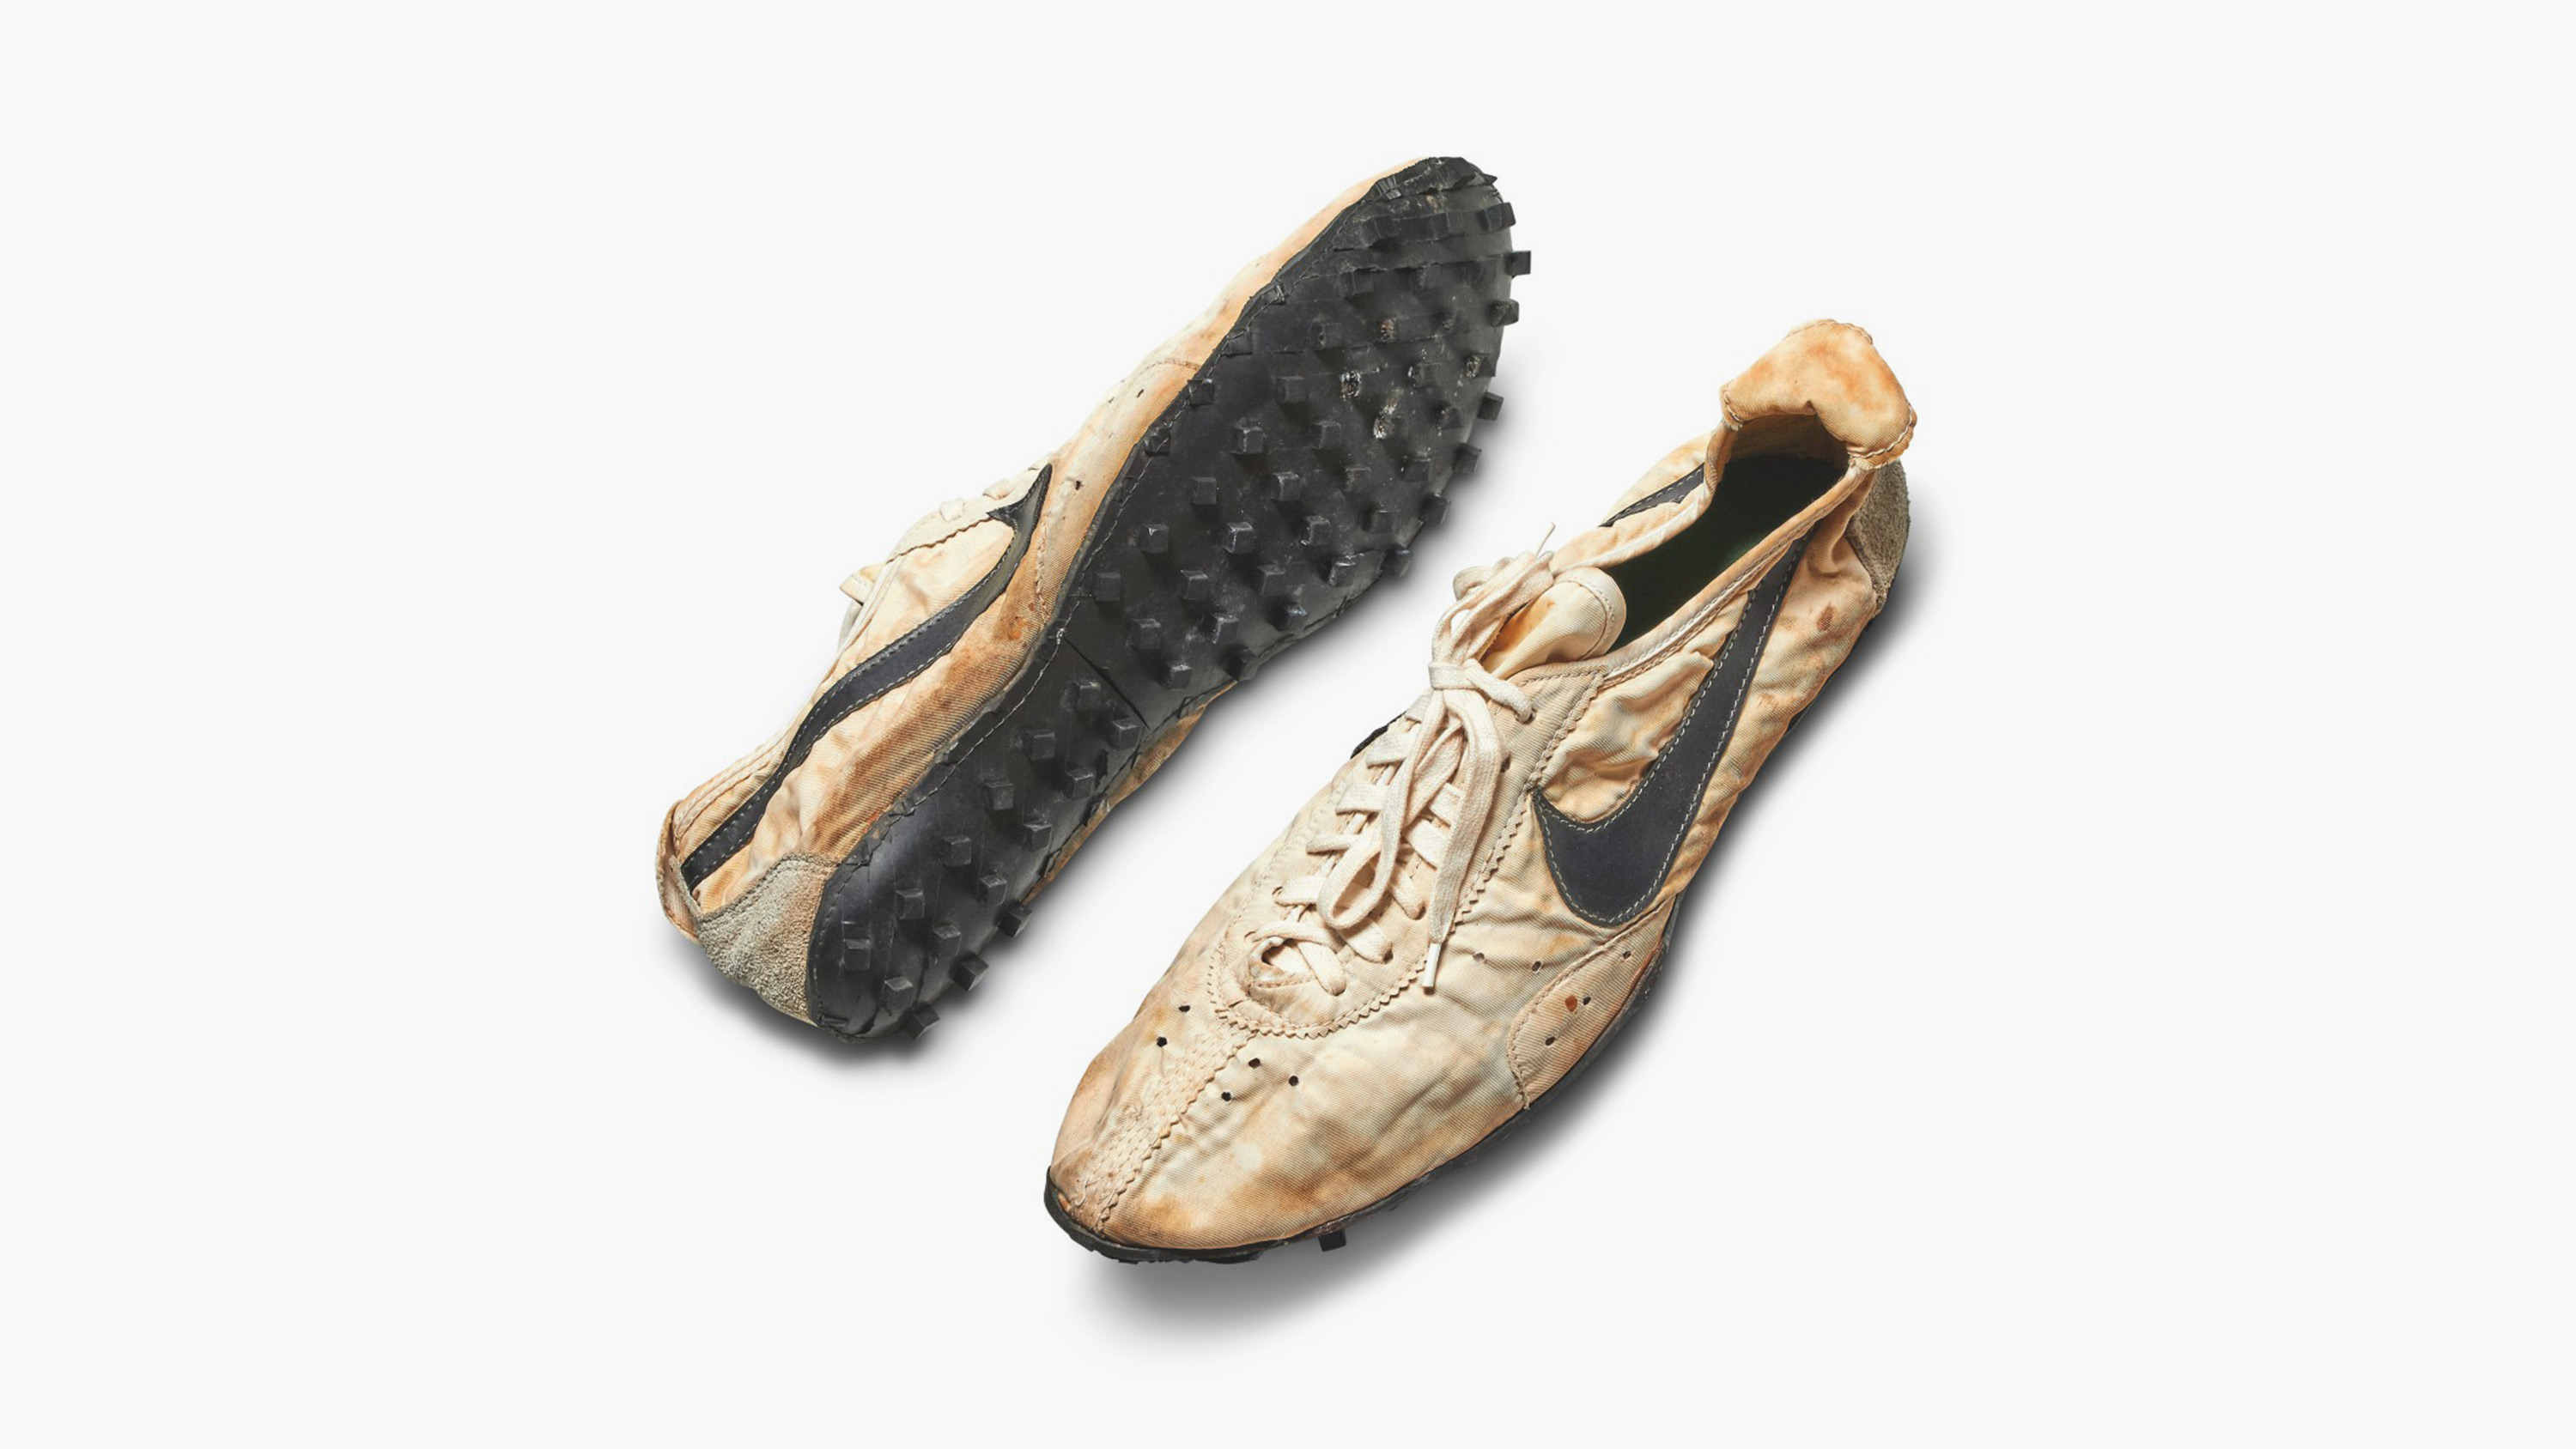 Nike Moon Shoe